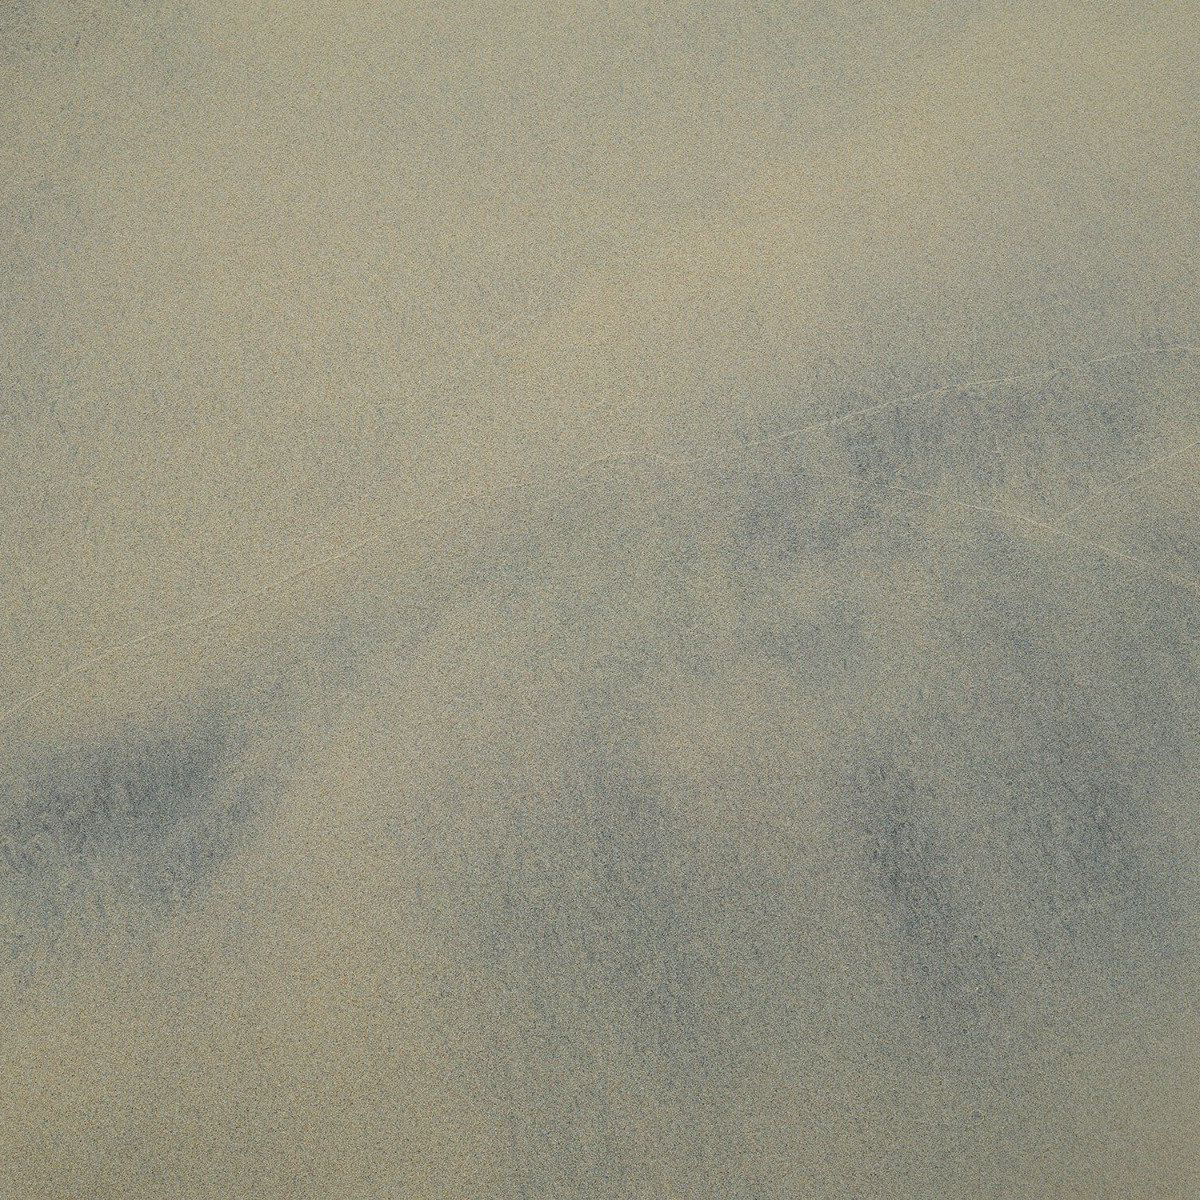 Close-up sand